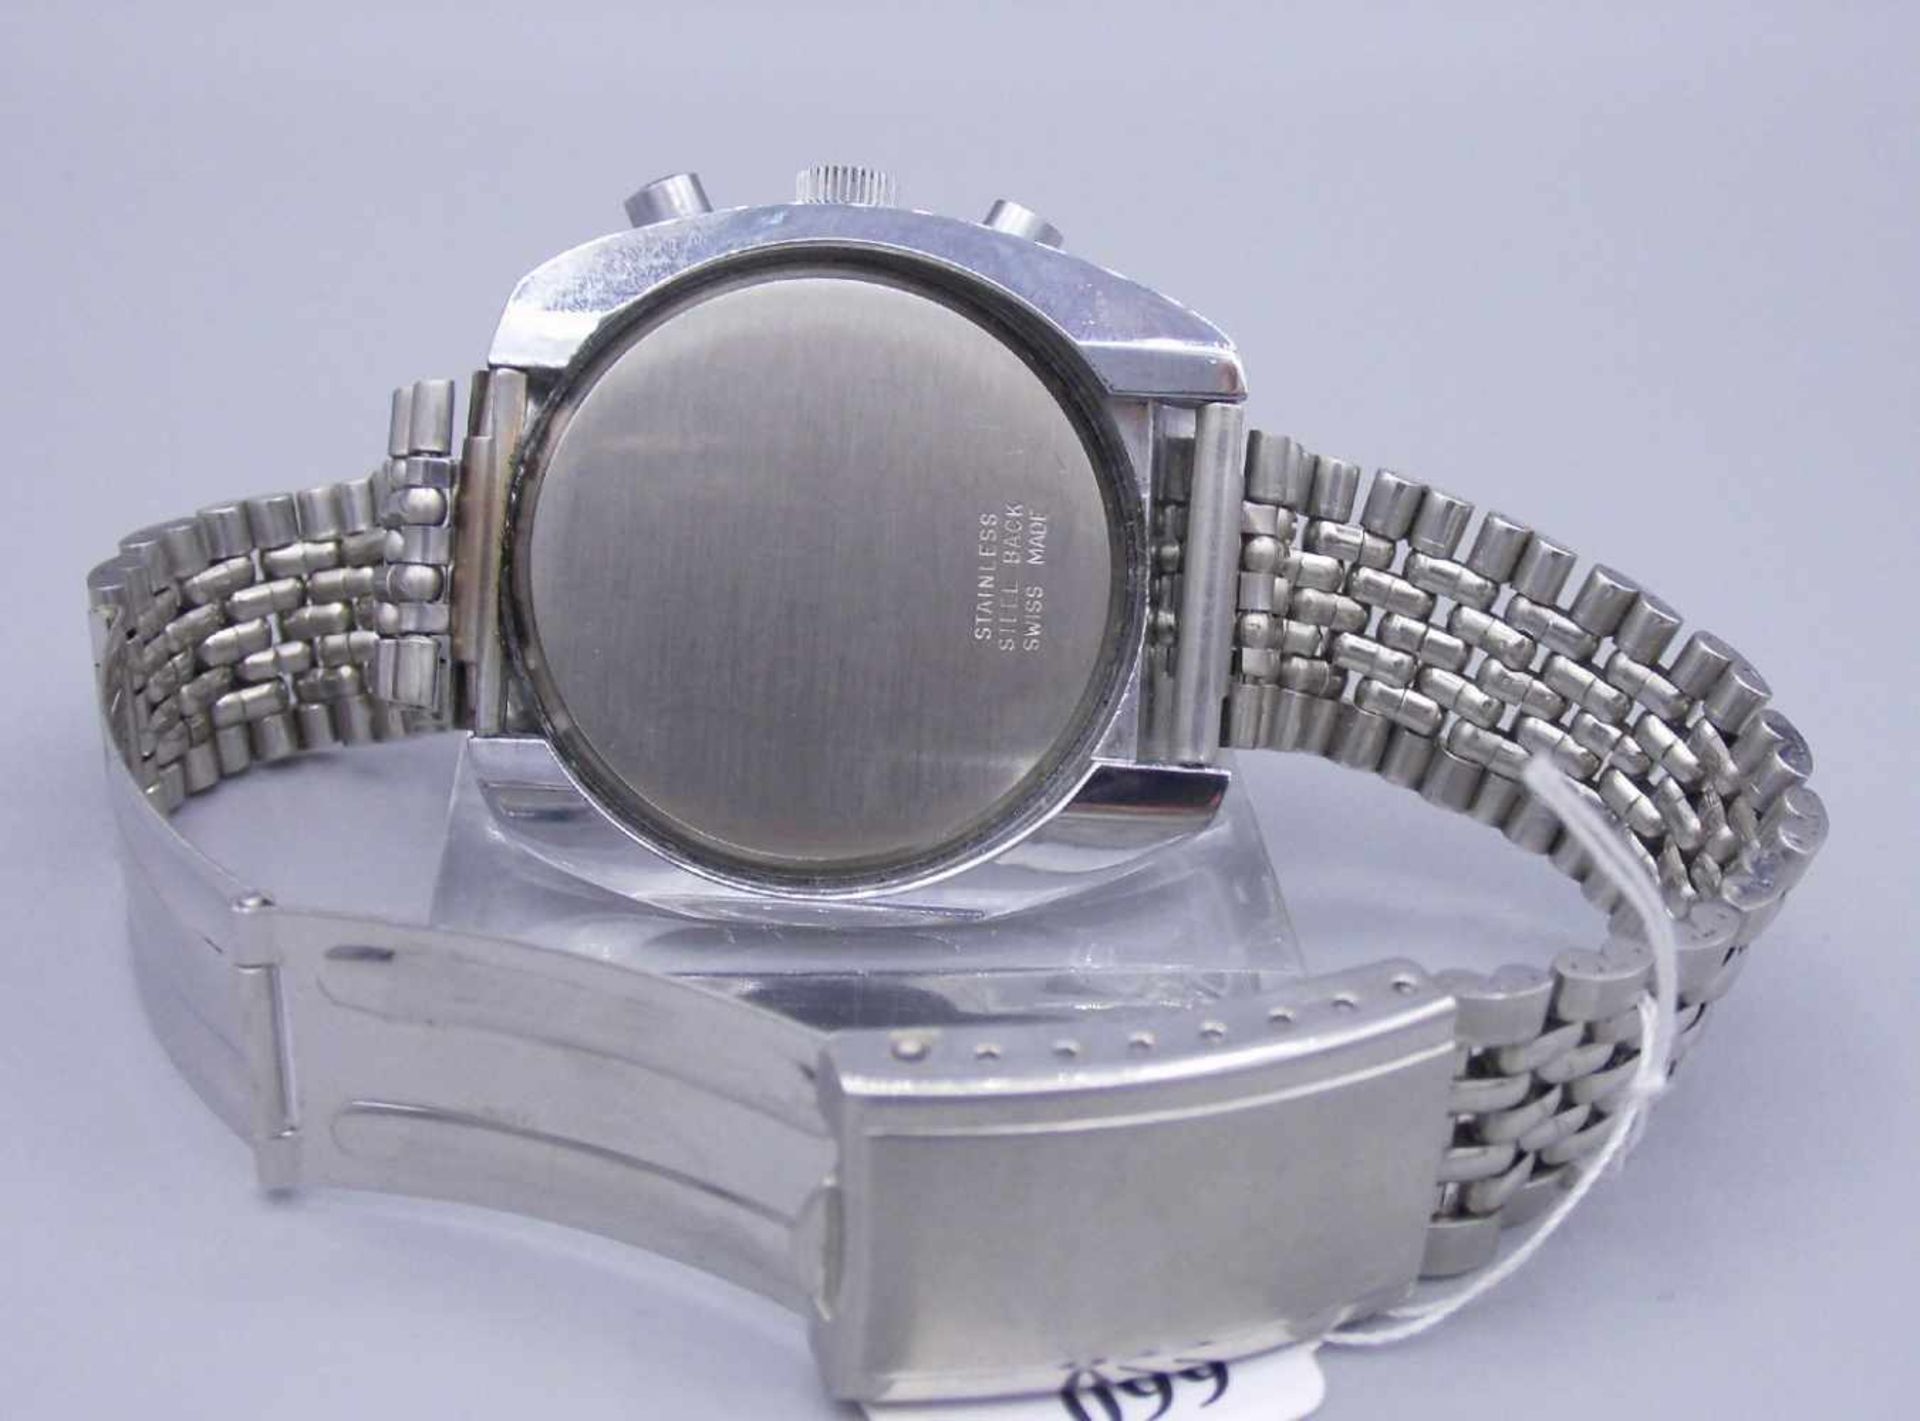 VINTAGE ARMBANDUHR / CHRONOGRAPH - Cimier Chronograph / wristwatch, Handaufzug, Manufaktur Montres - Image 5 of 5